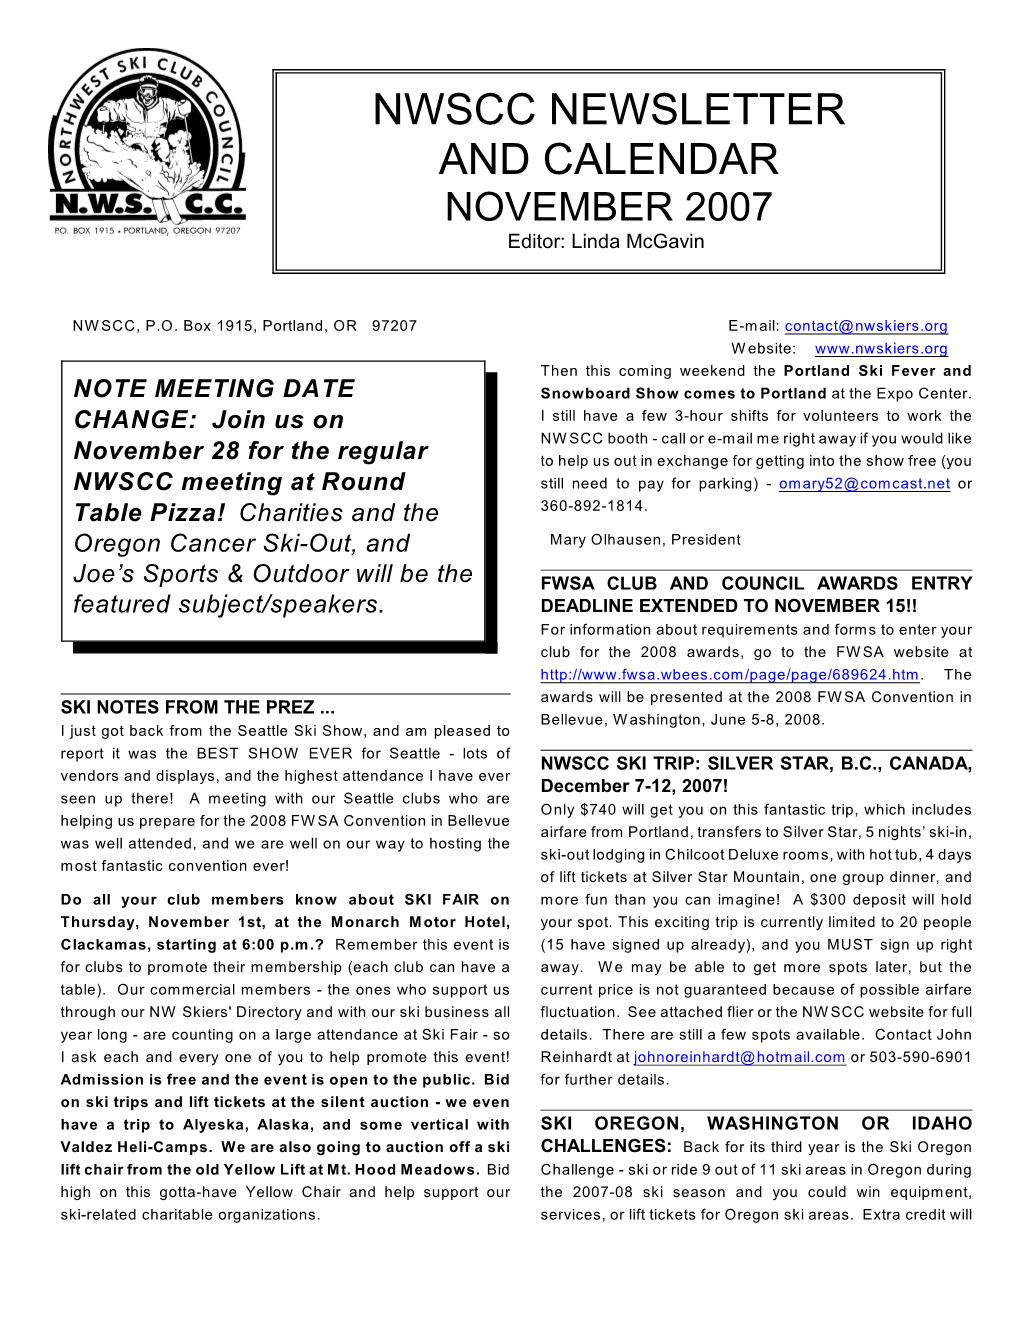 NOVEMBER 2007 Editor: Linda Mcgavin